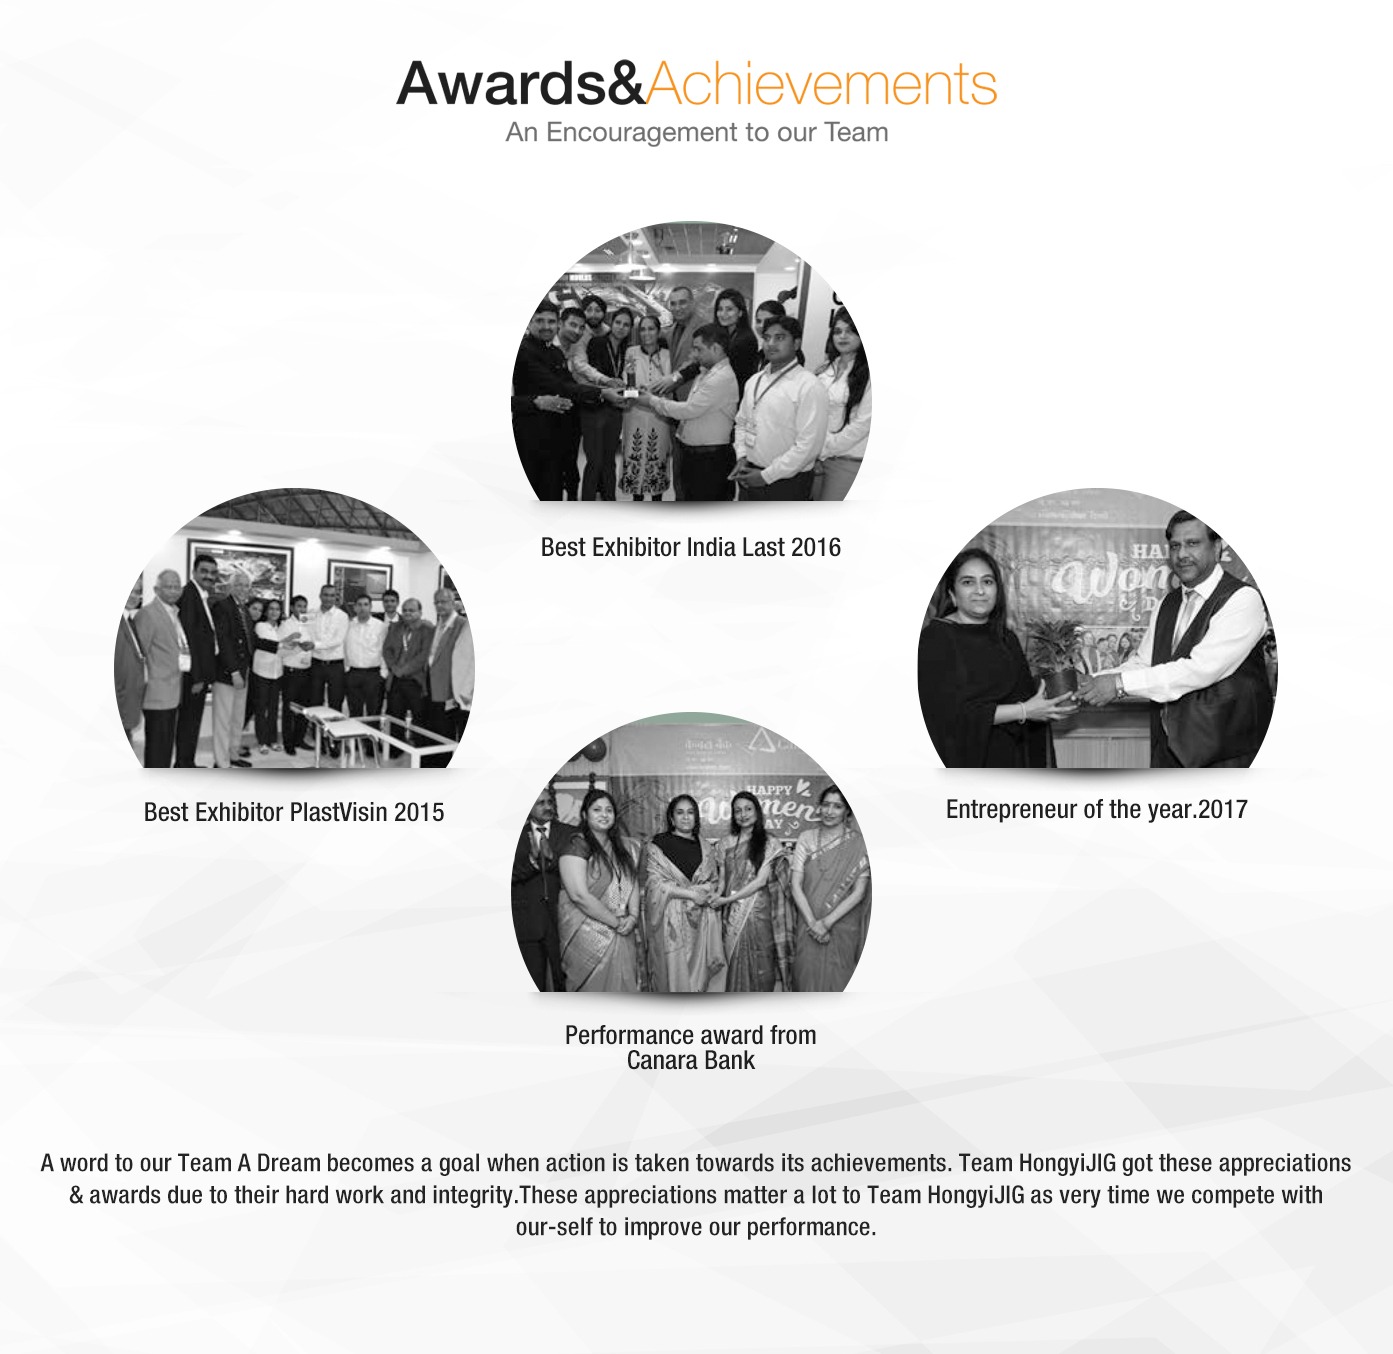 Awards & Achievements